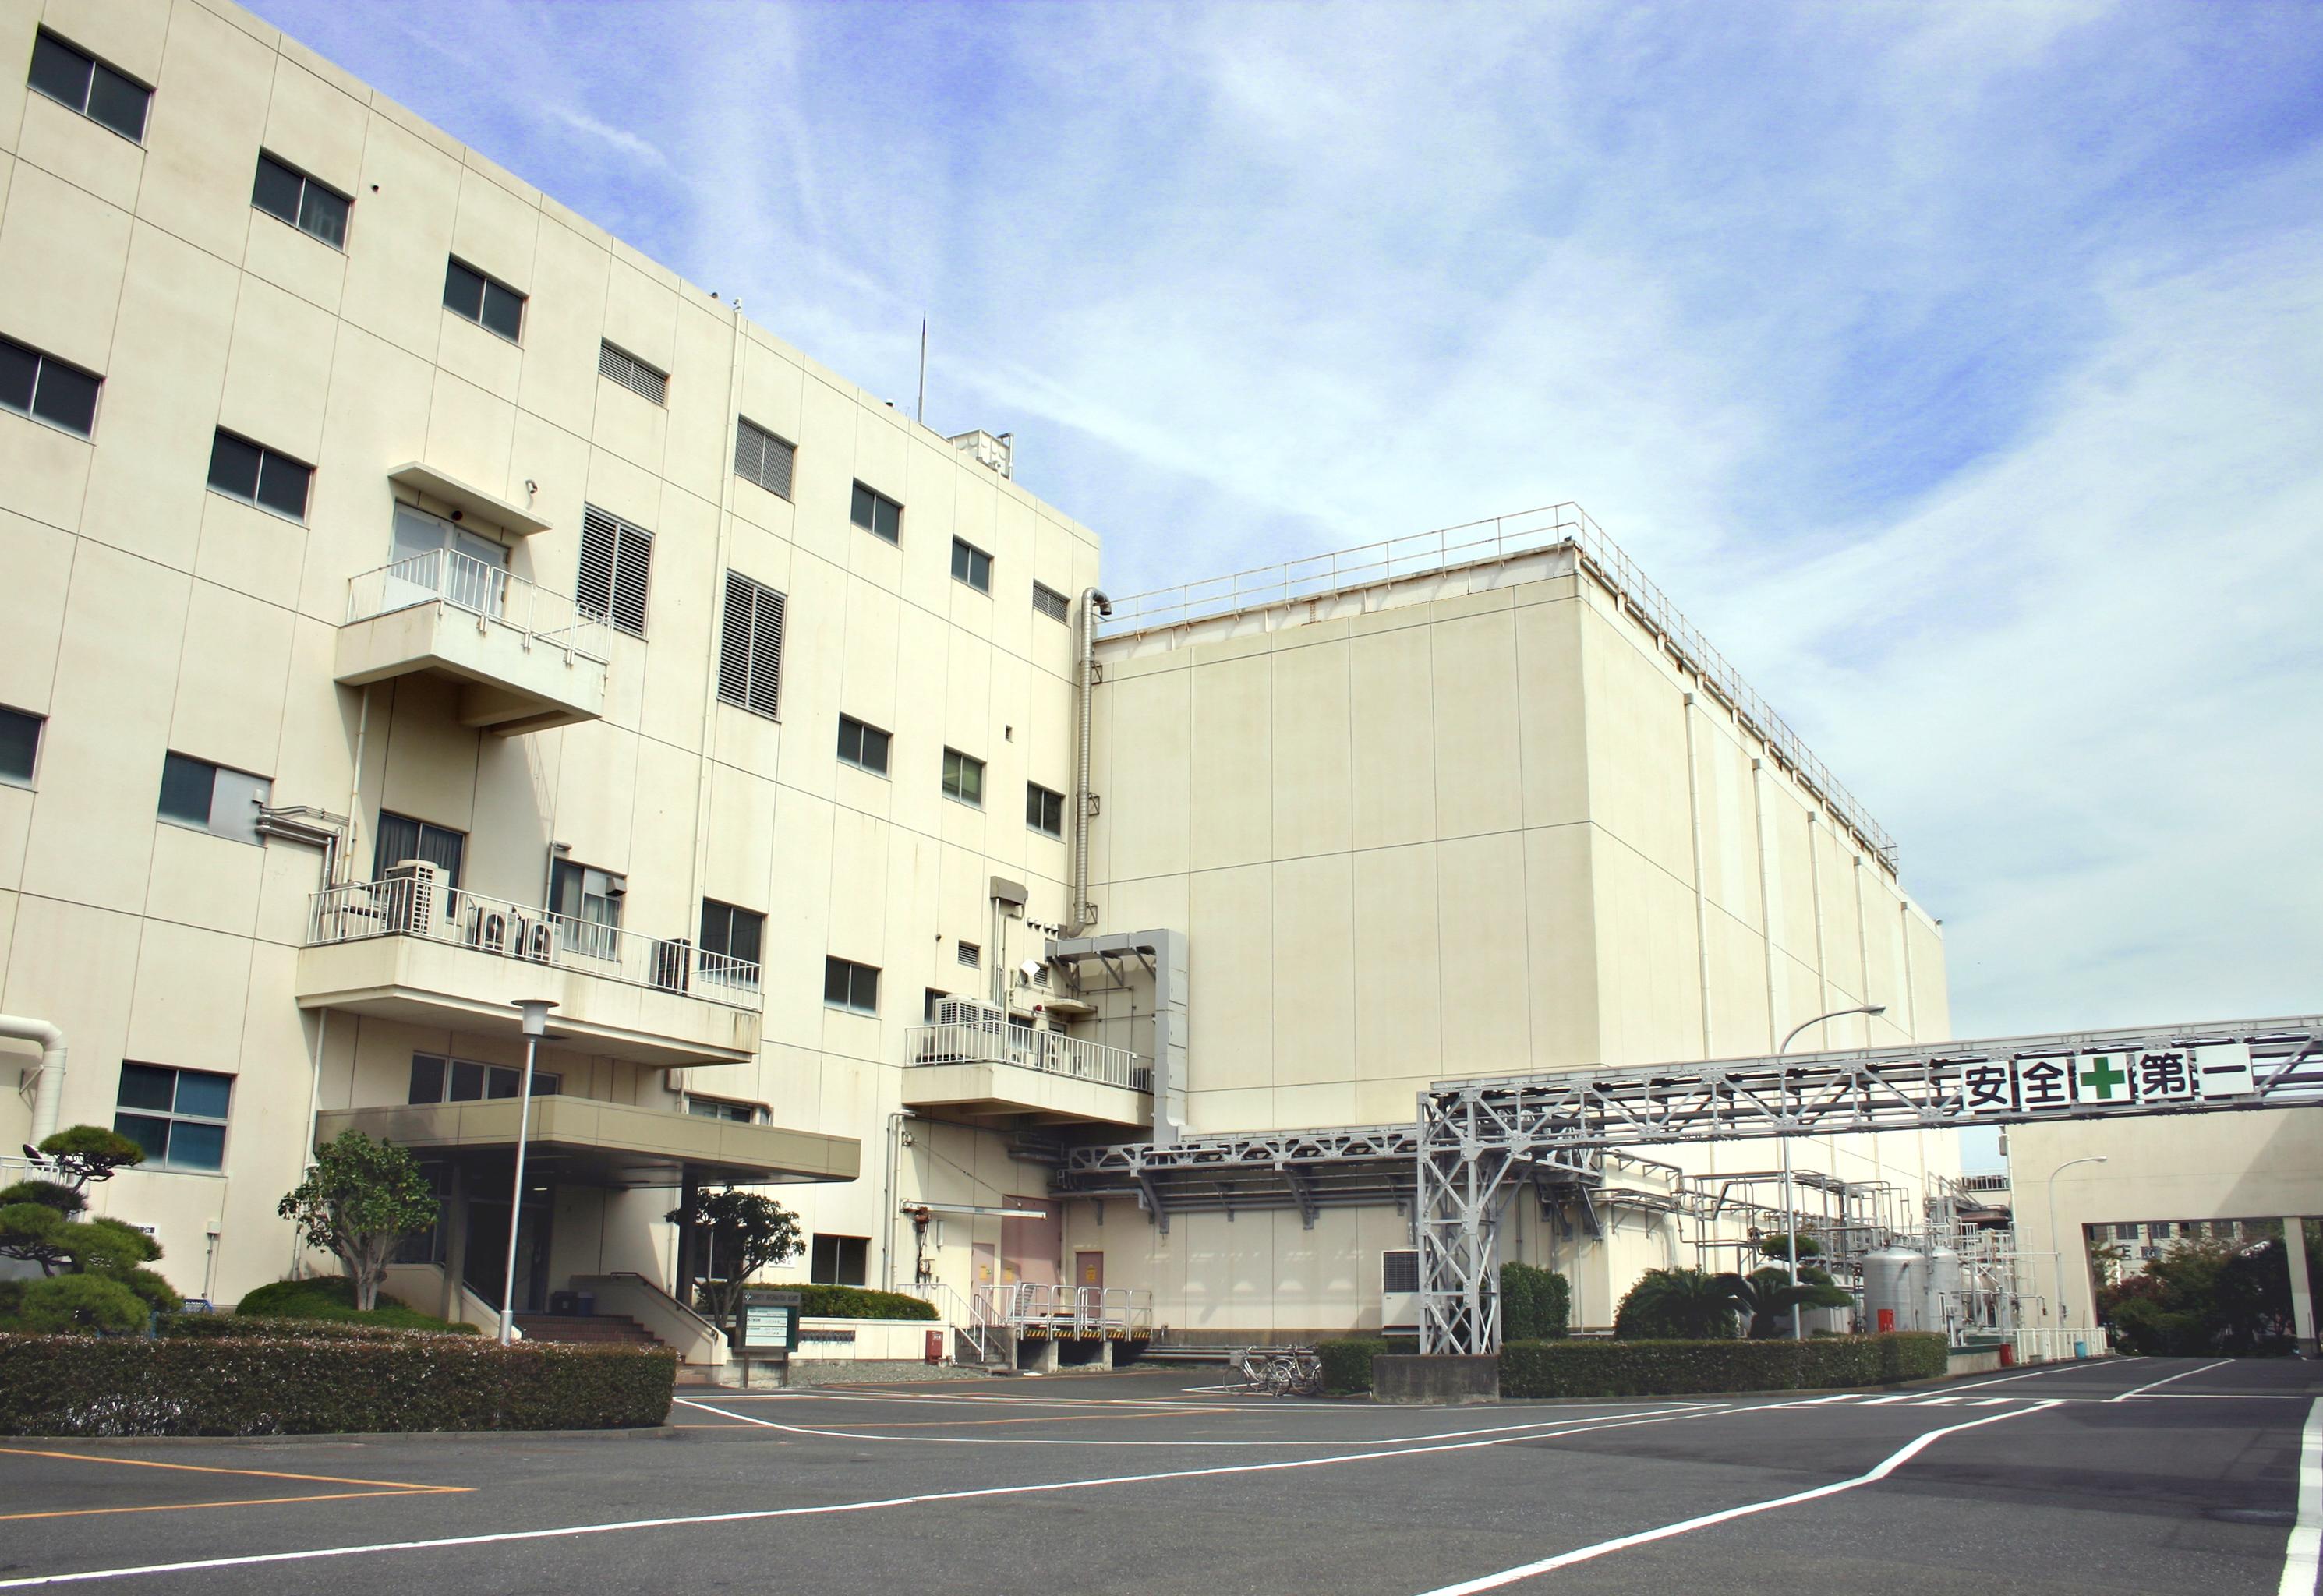 Yokosuka Nuclear Power Station